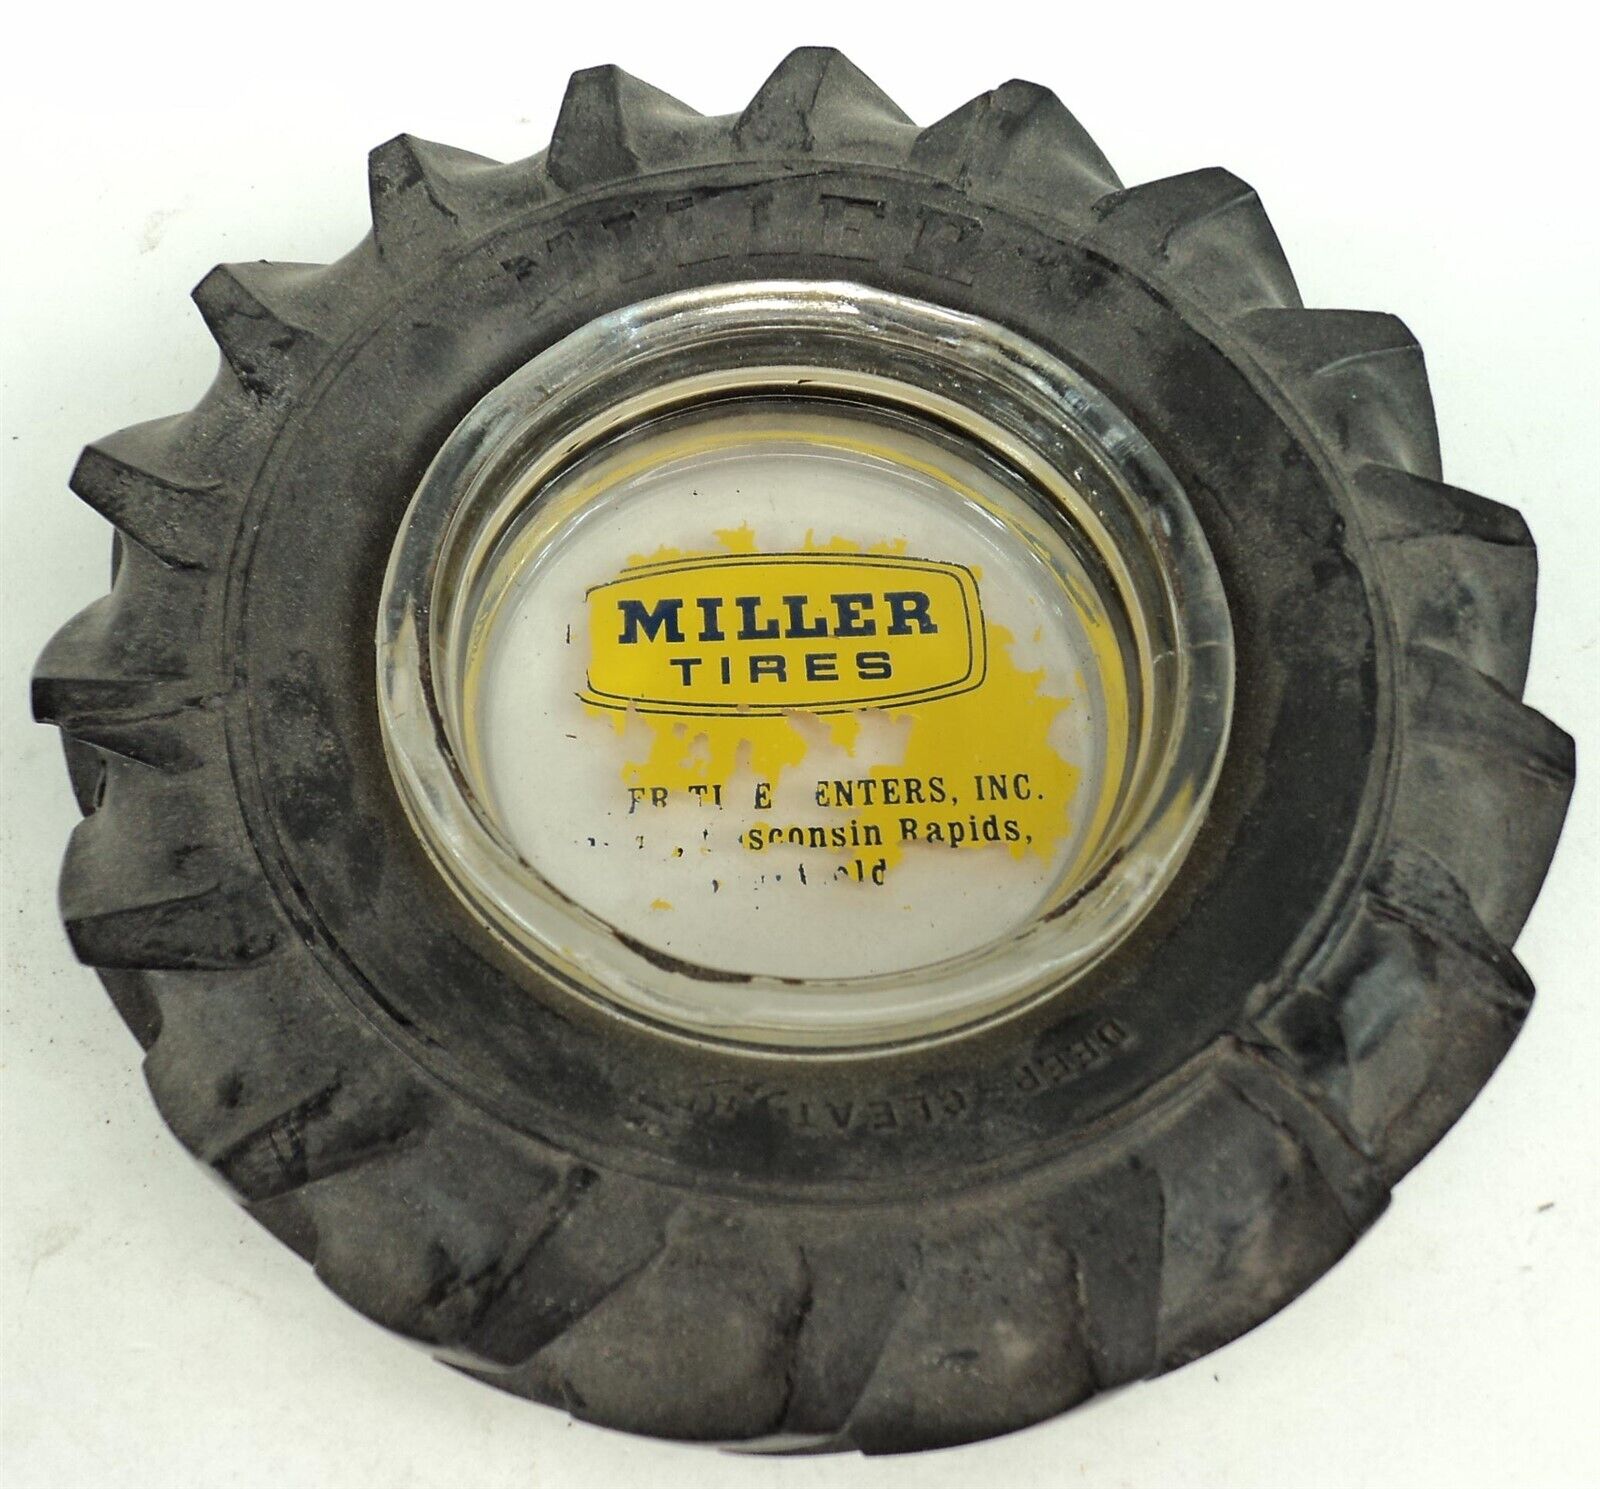 Vintage Miller Tires Rubber & Glass Ashtray 